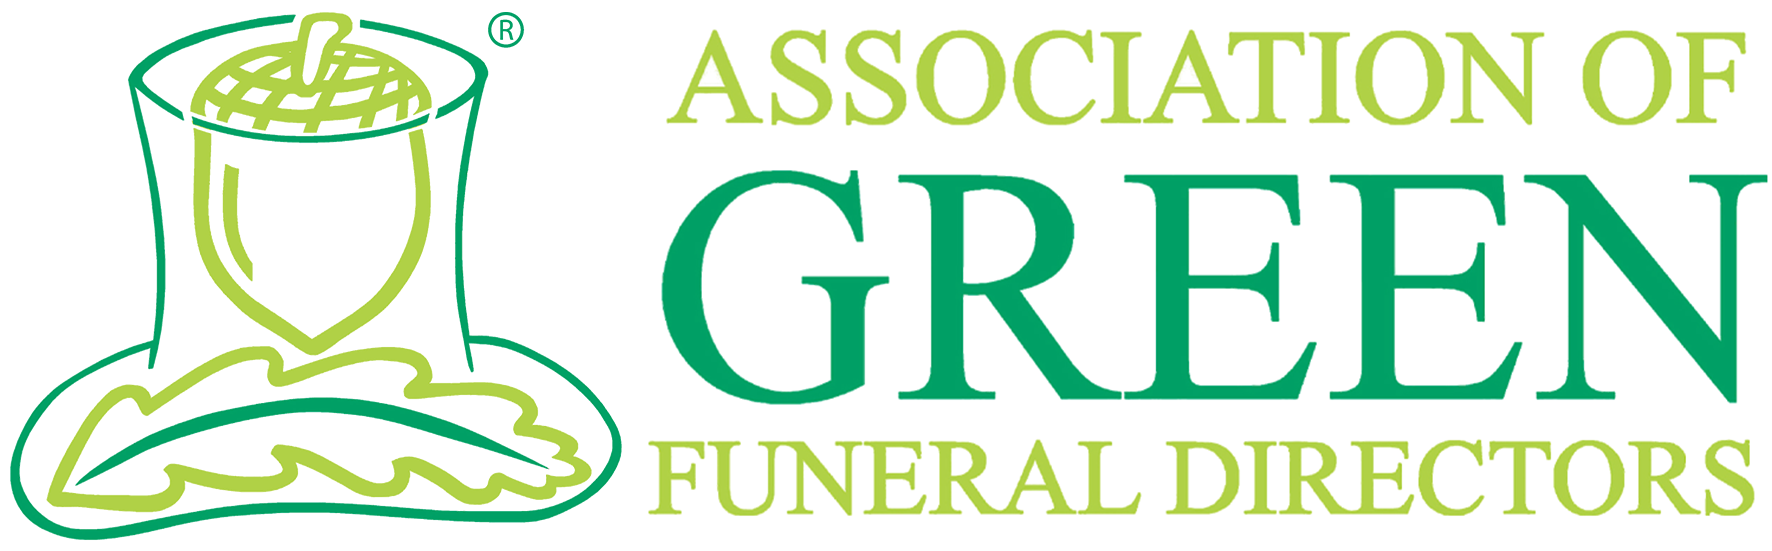 Association of Green Funeral Directors